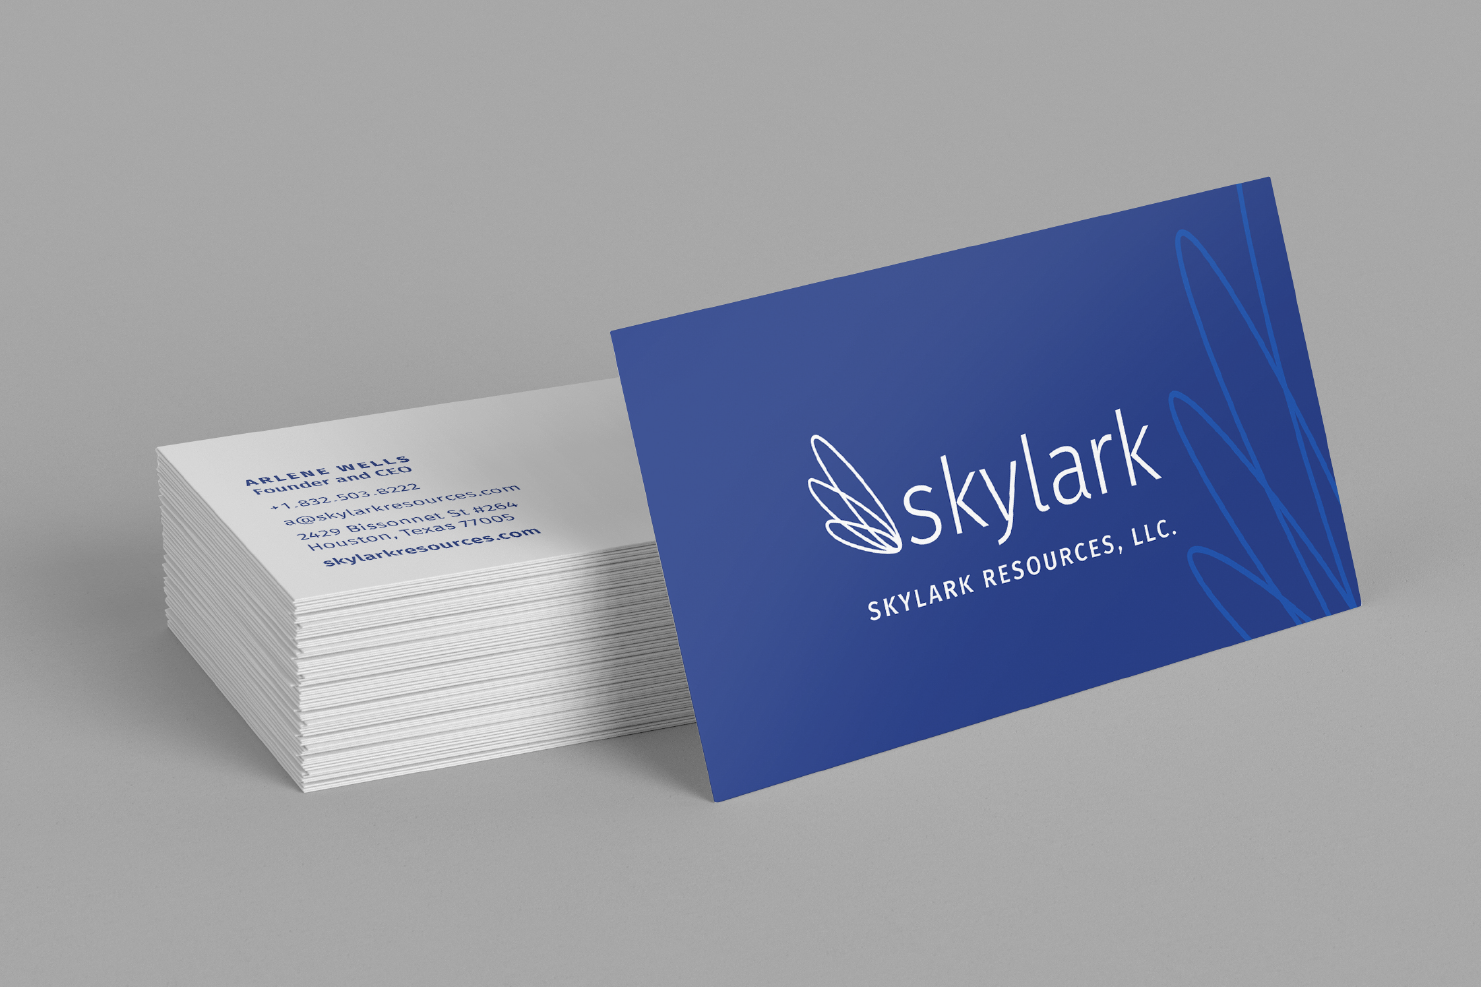 Business card designs for Skylark Resources, LLC.